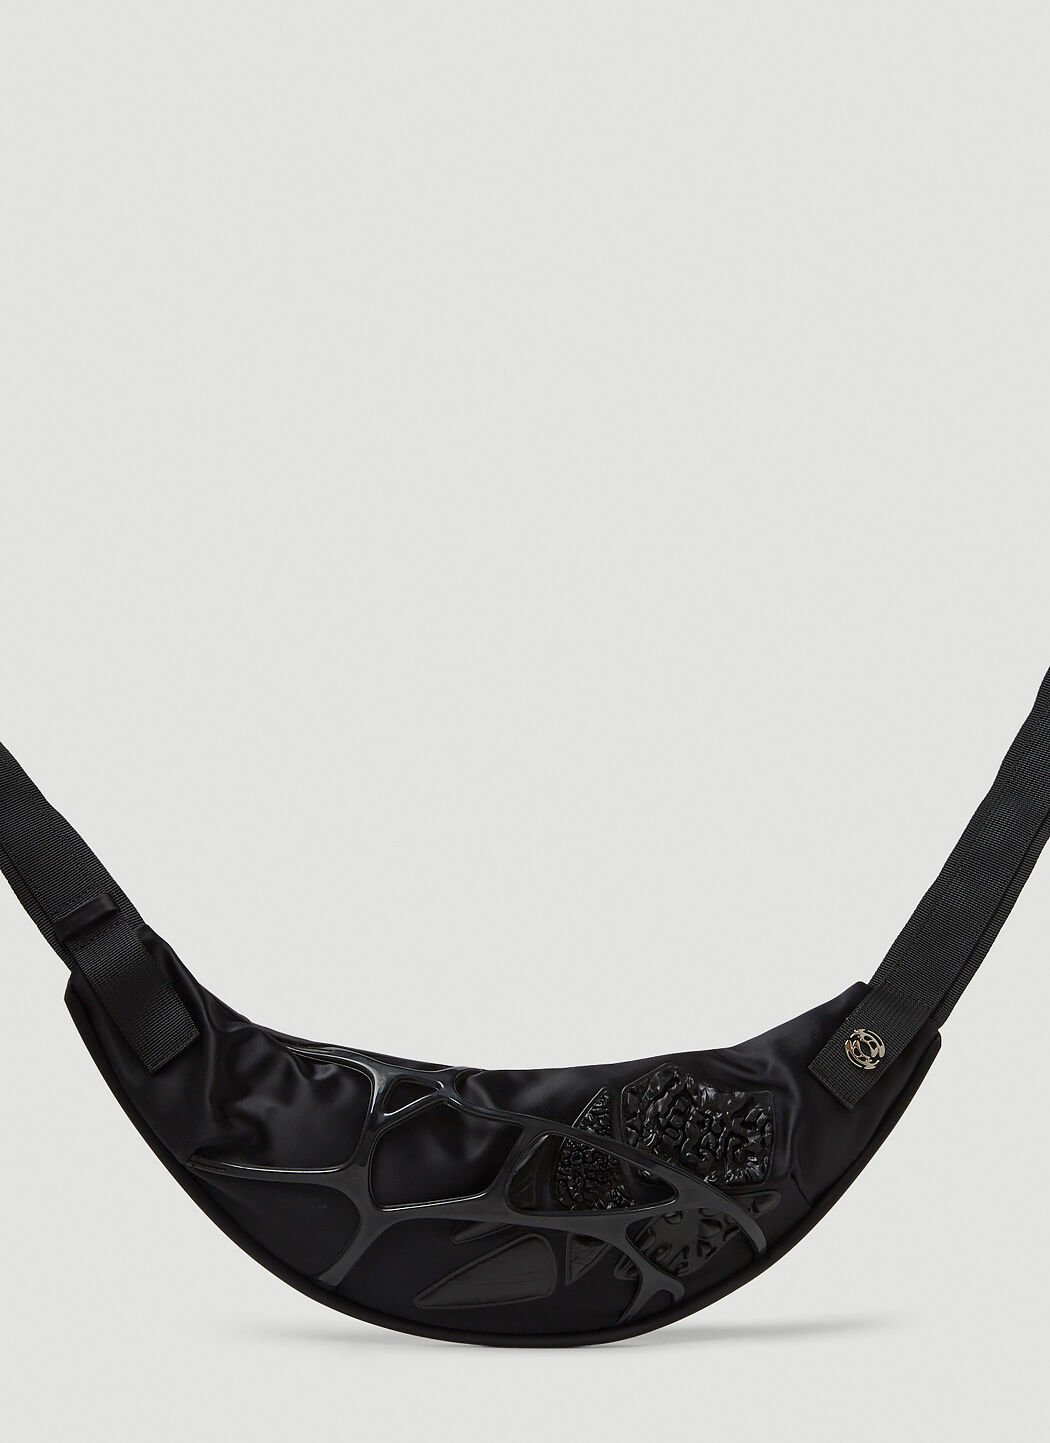 Vivienne Westwood Neuro 2.0 Belt Bag Black vvw0256011